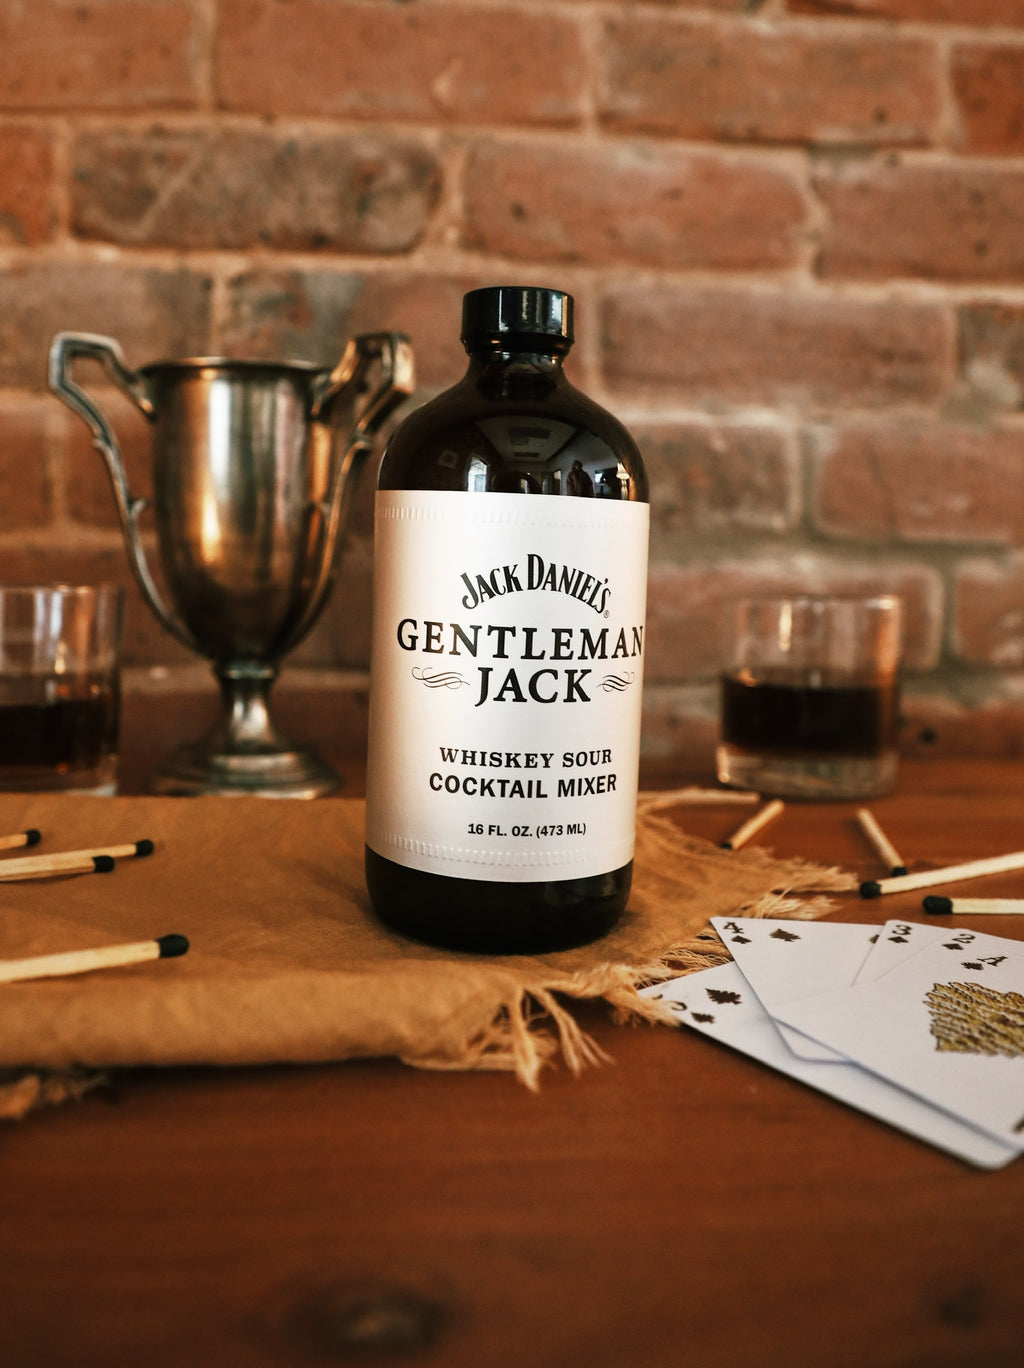 Jack Daniel's Gentleman Jack Whiskey Sour Cocktail Mixer